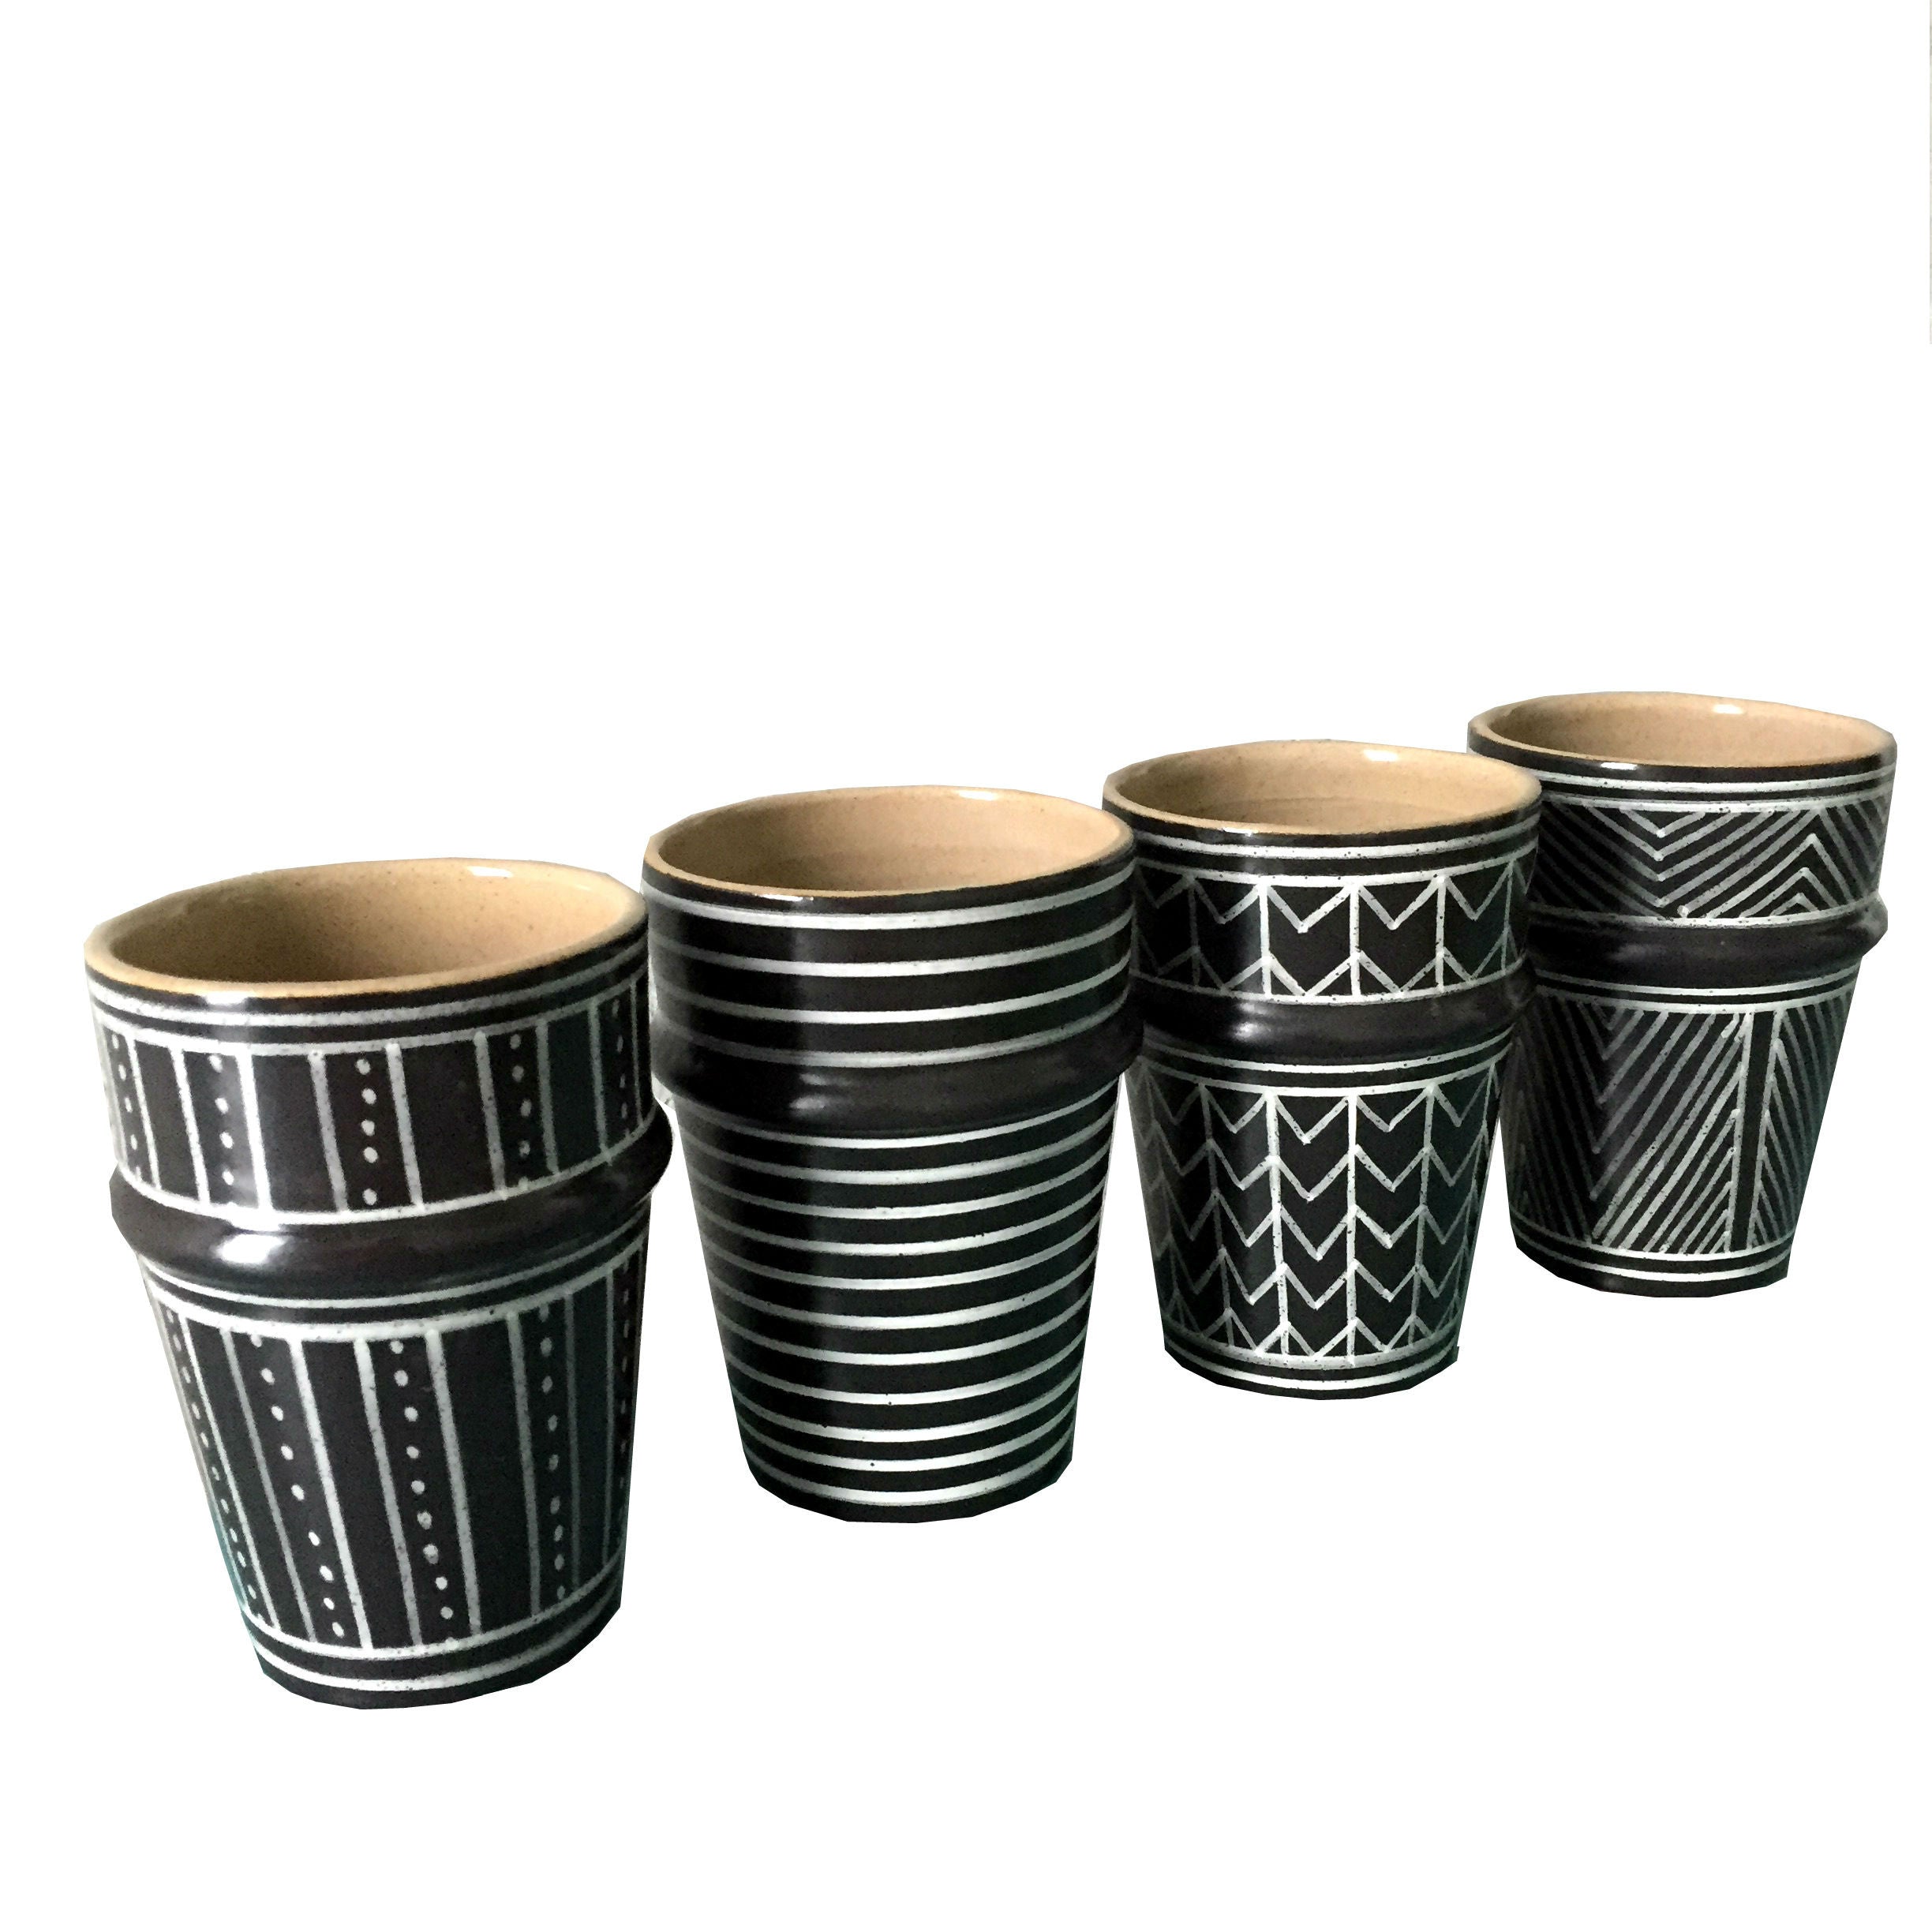 GRAPHIC BELDI CUPS-PORCELAIN set of 4